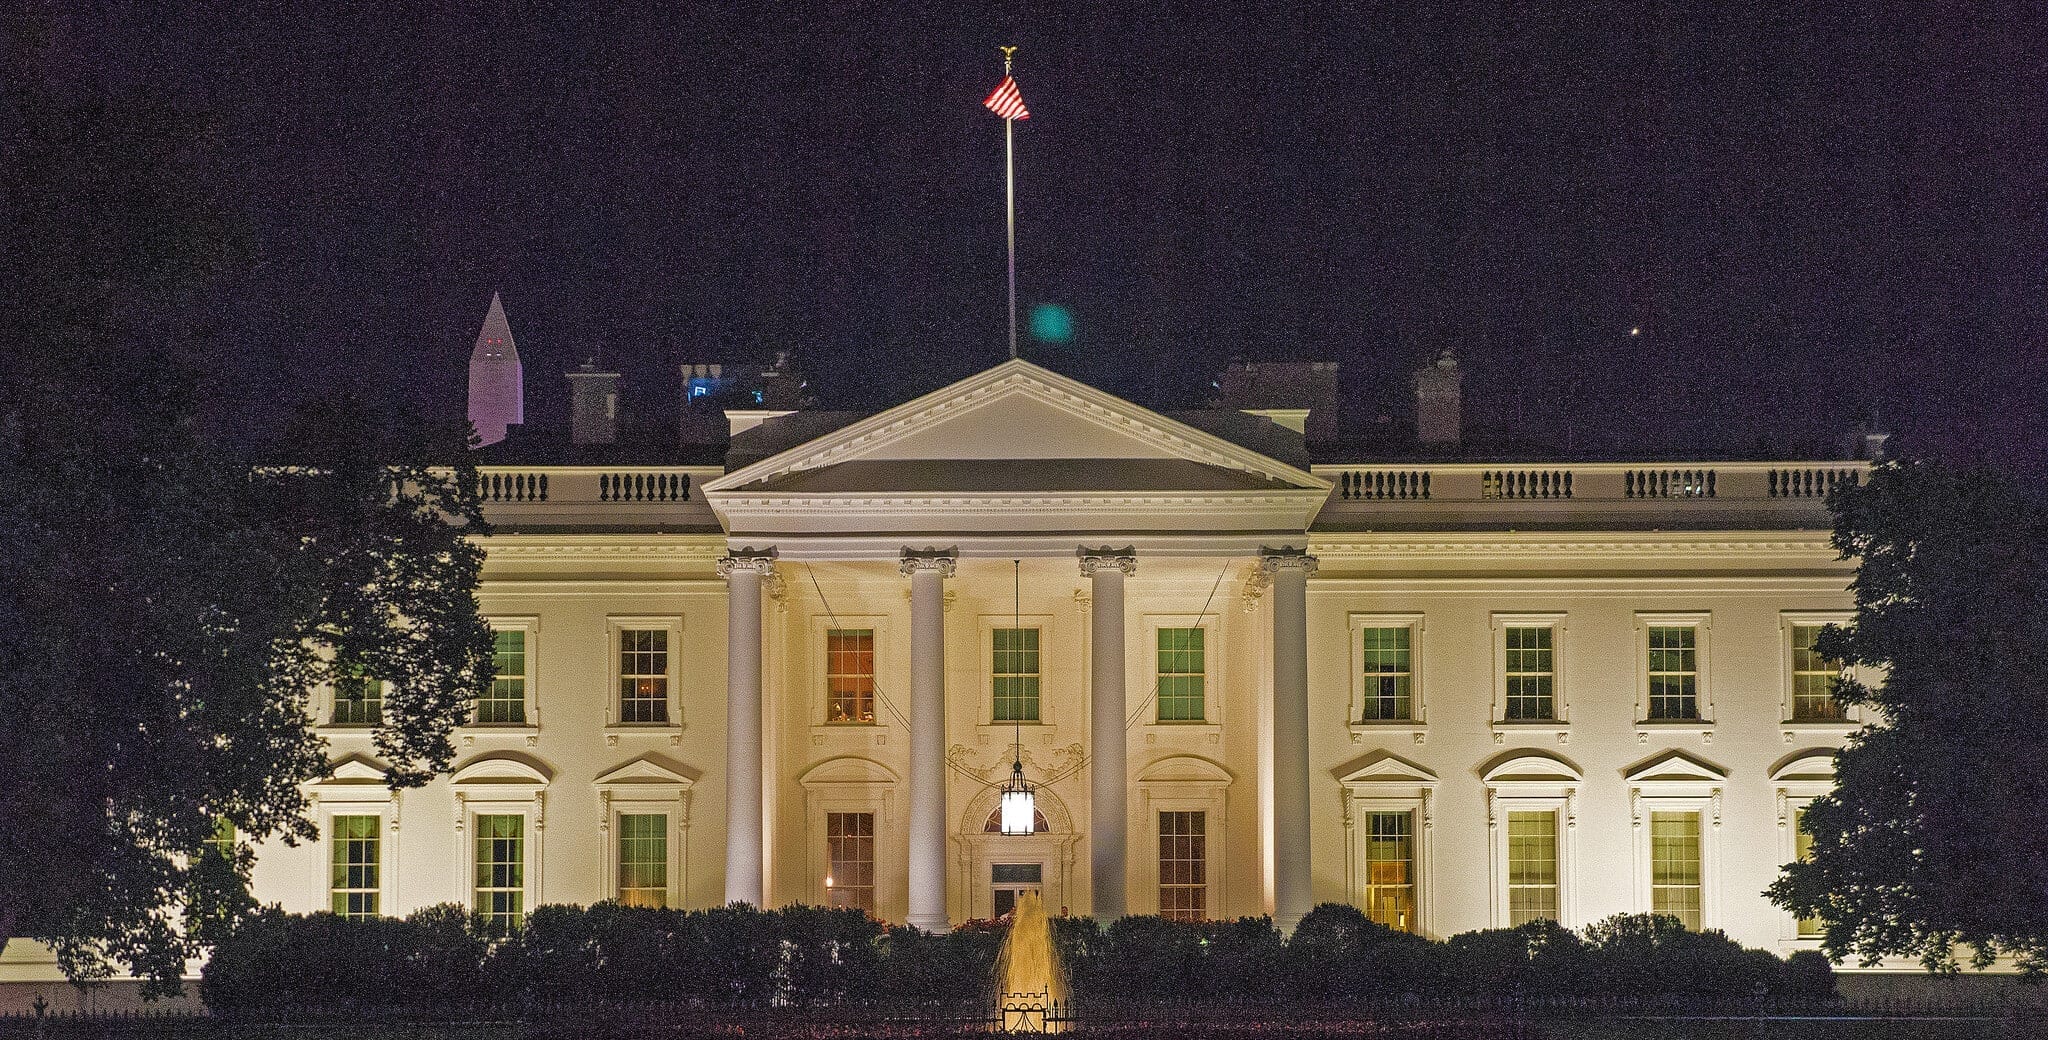 whitehouse at night